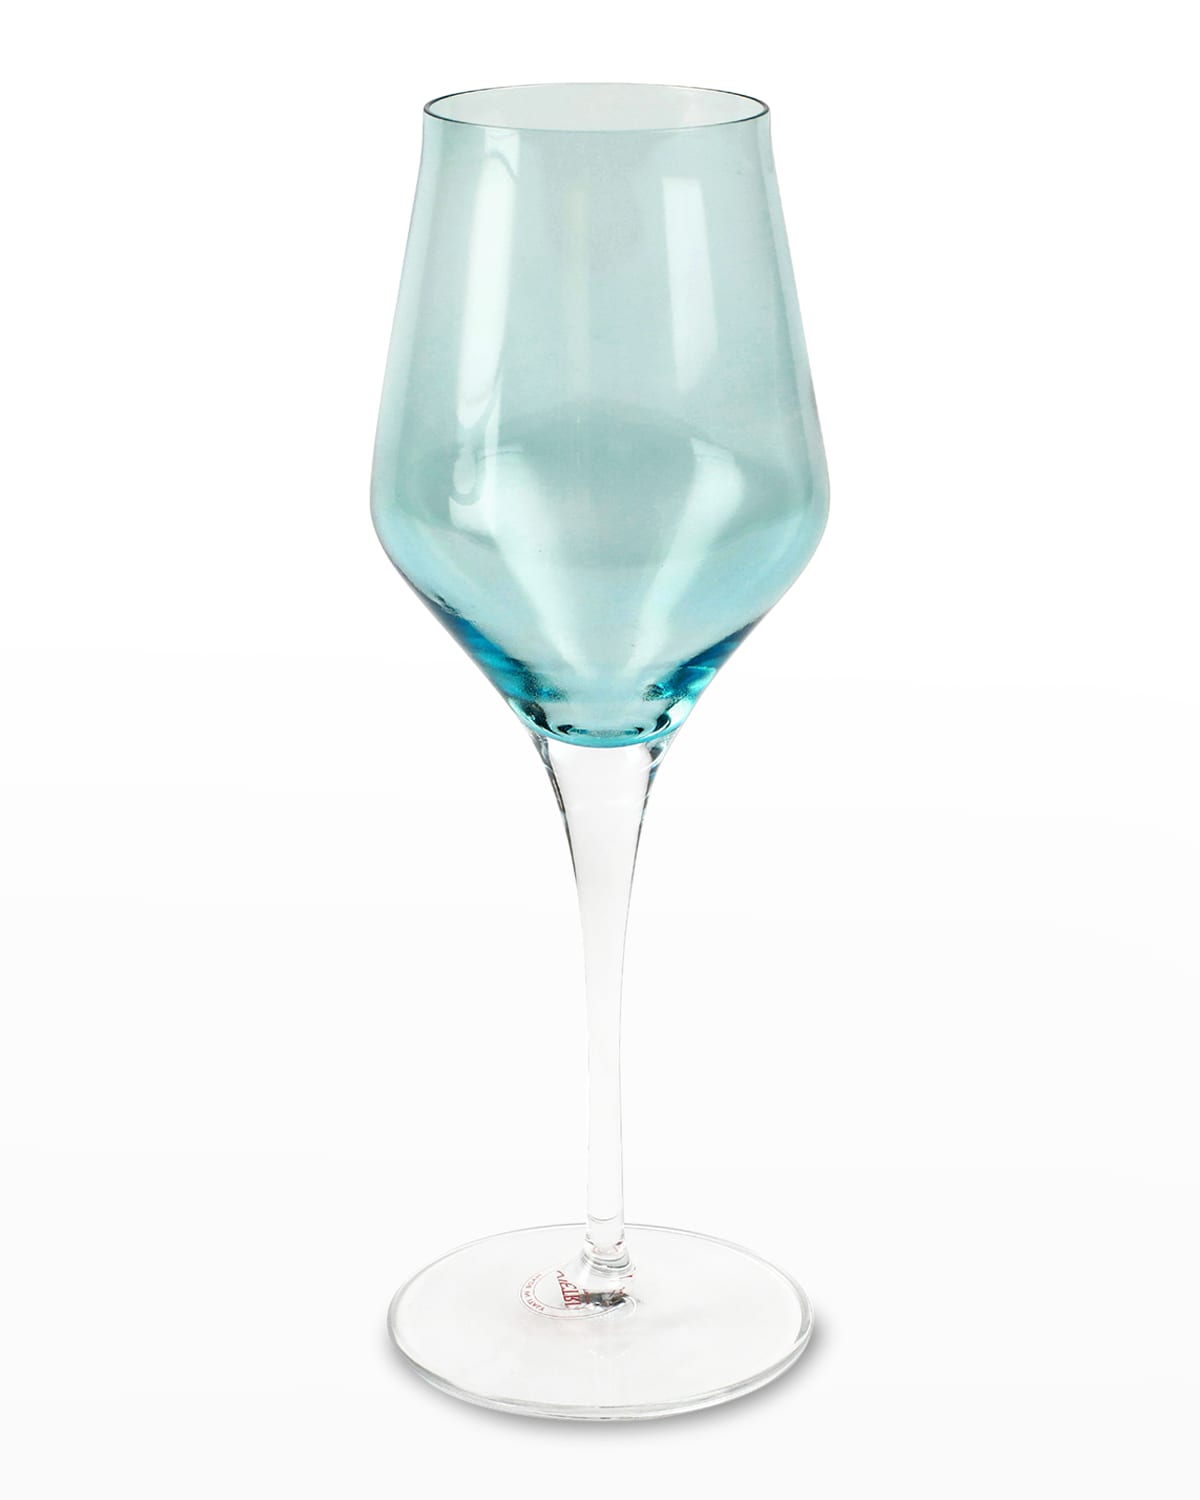 Vietri Contessa Teal Wine Glass